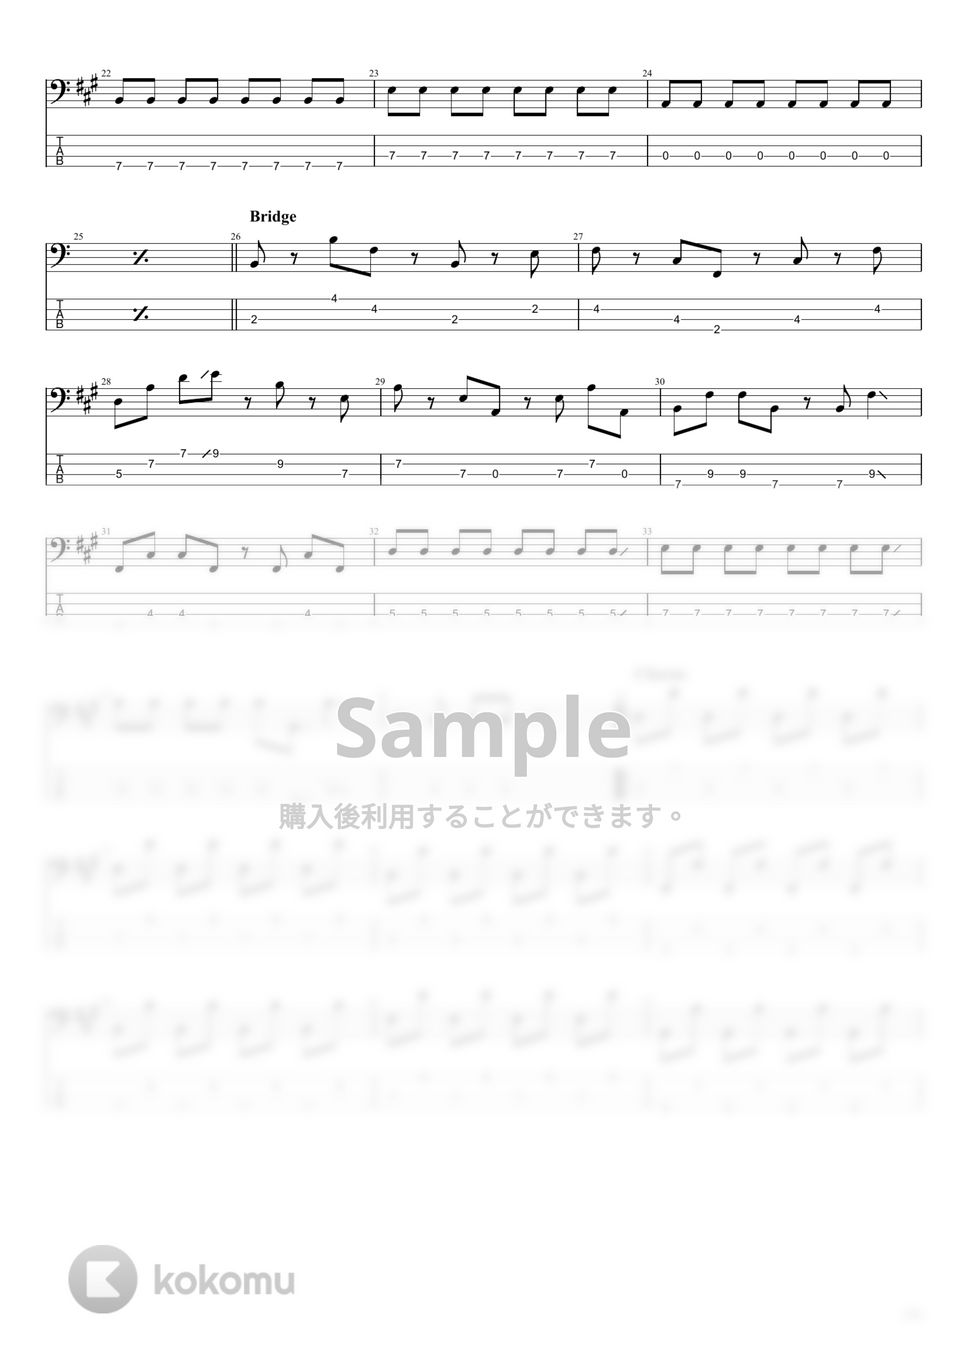 back number - back number楽譜集 (10曲) by まっきん